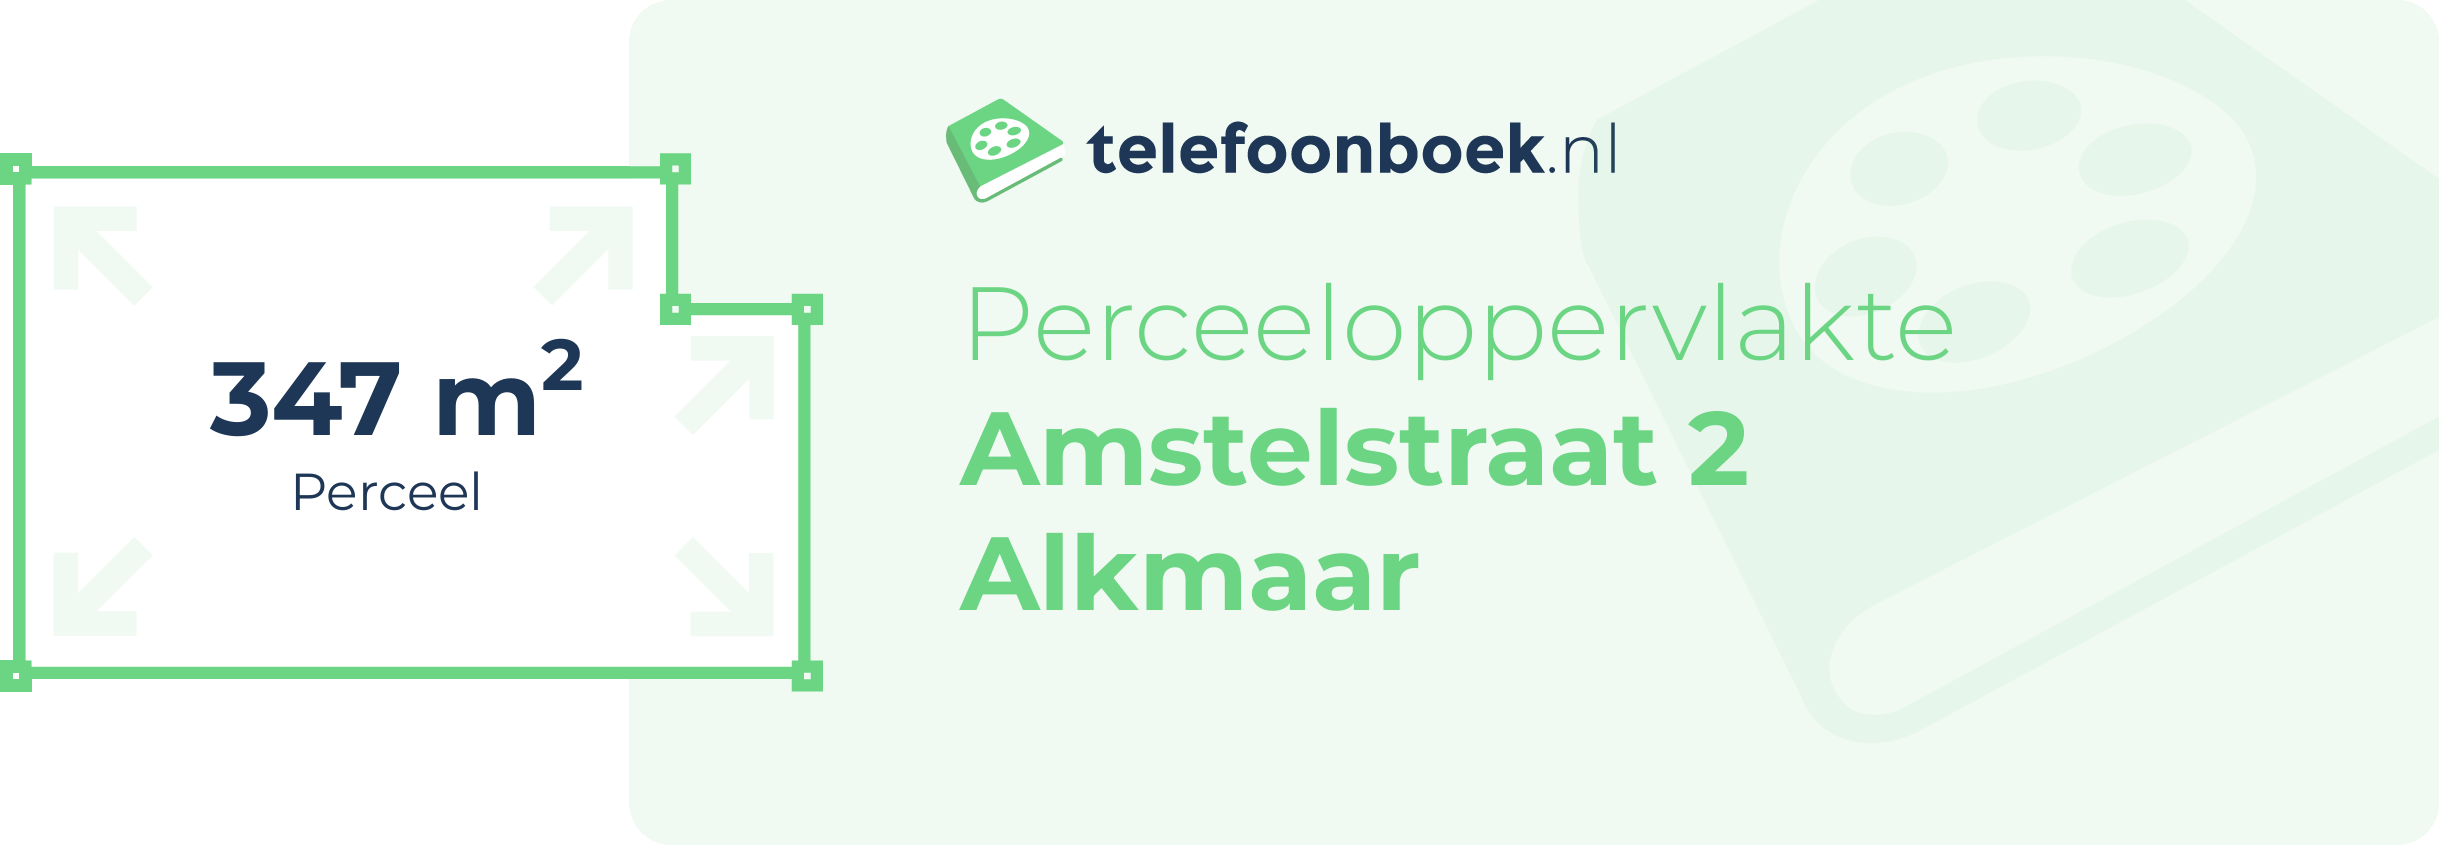 Perceeloppervlakte Amstelstraat 2 Alkmaar